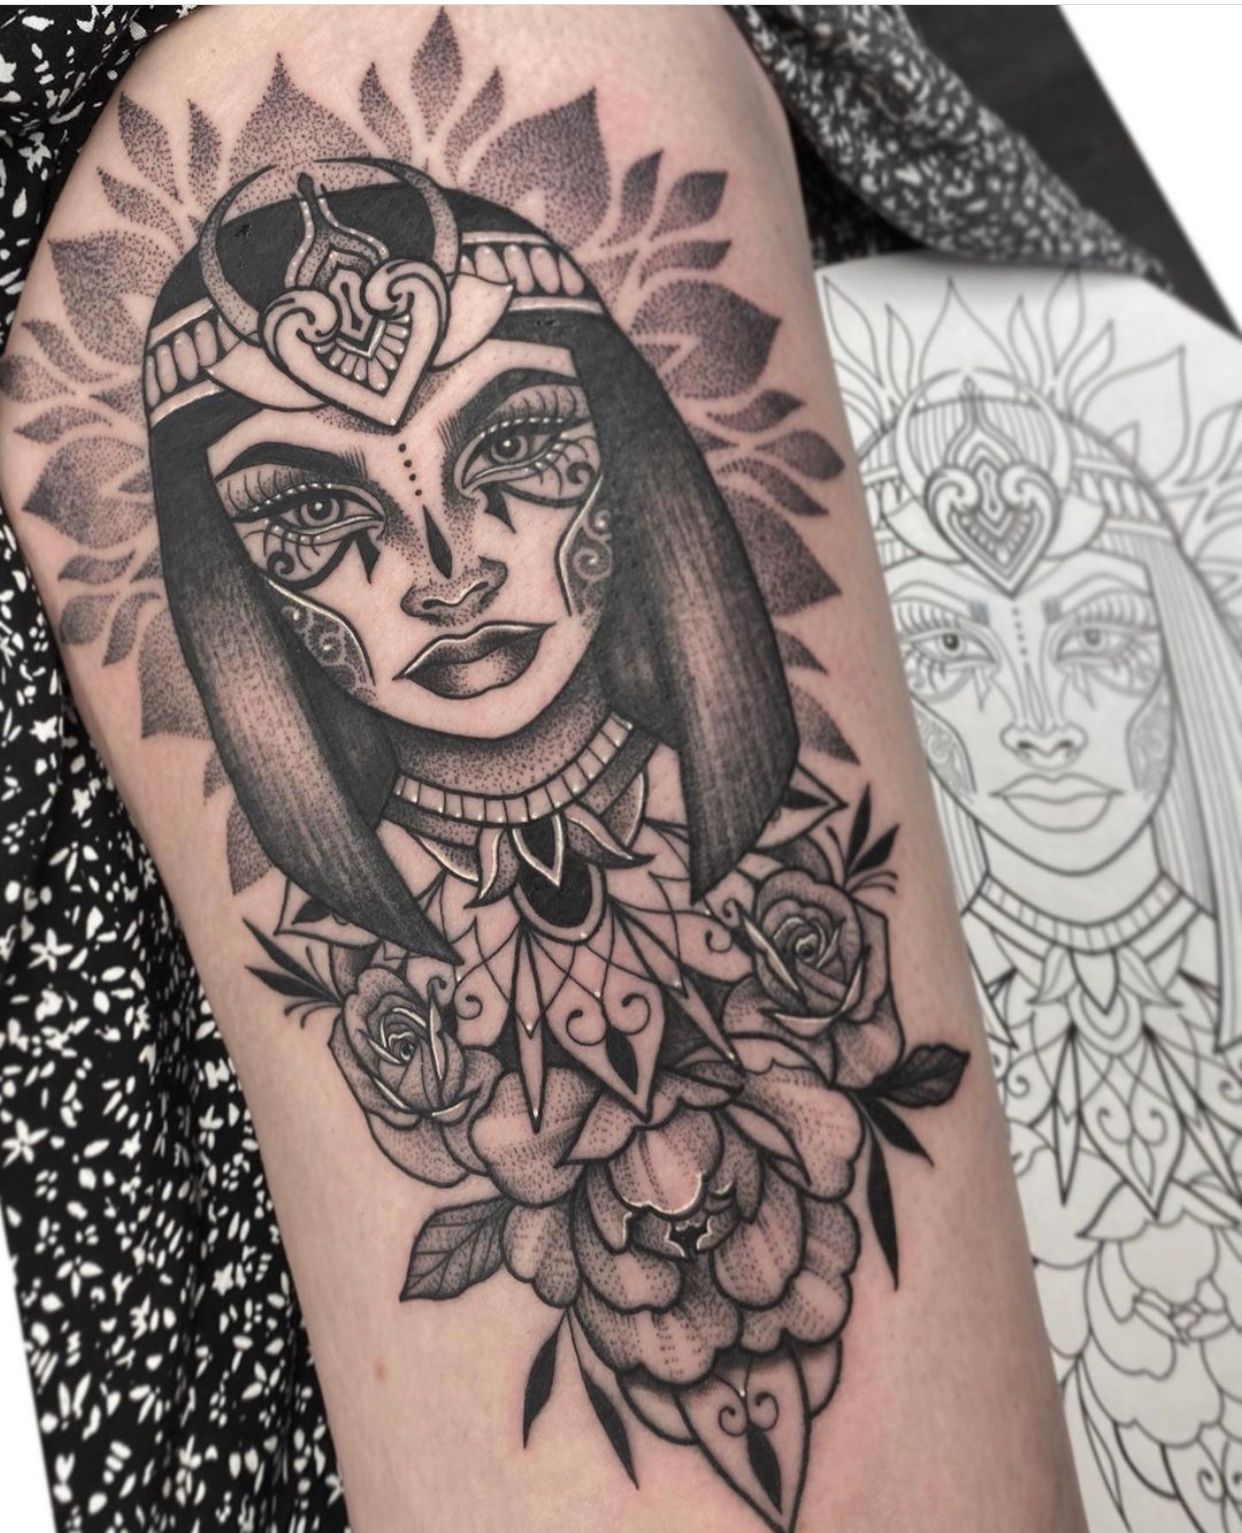 Helsinki Tattoo Studio I Cleopatra Ink